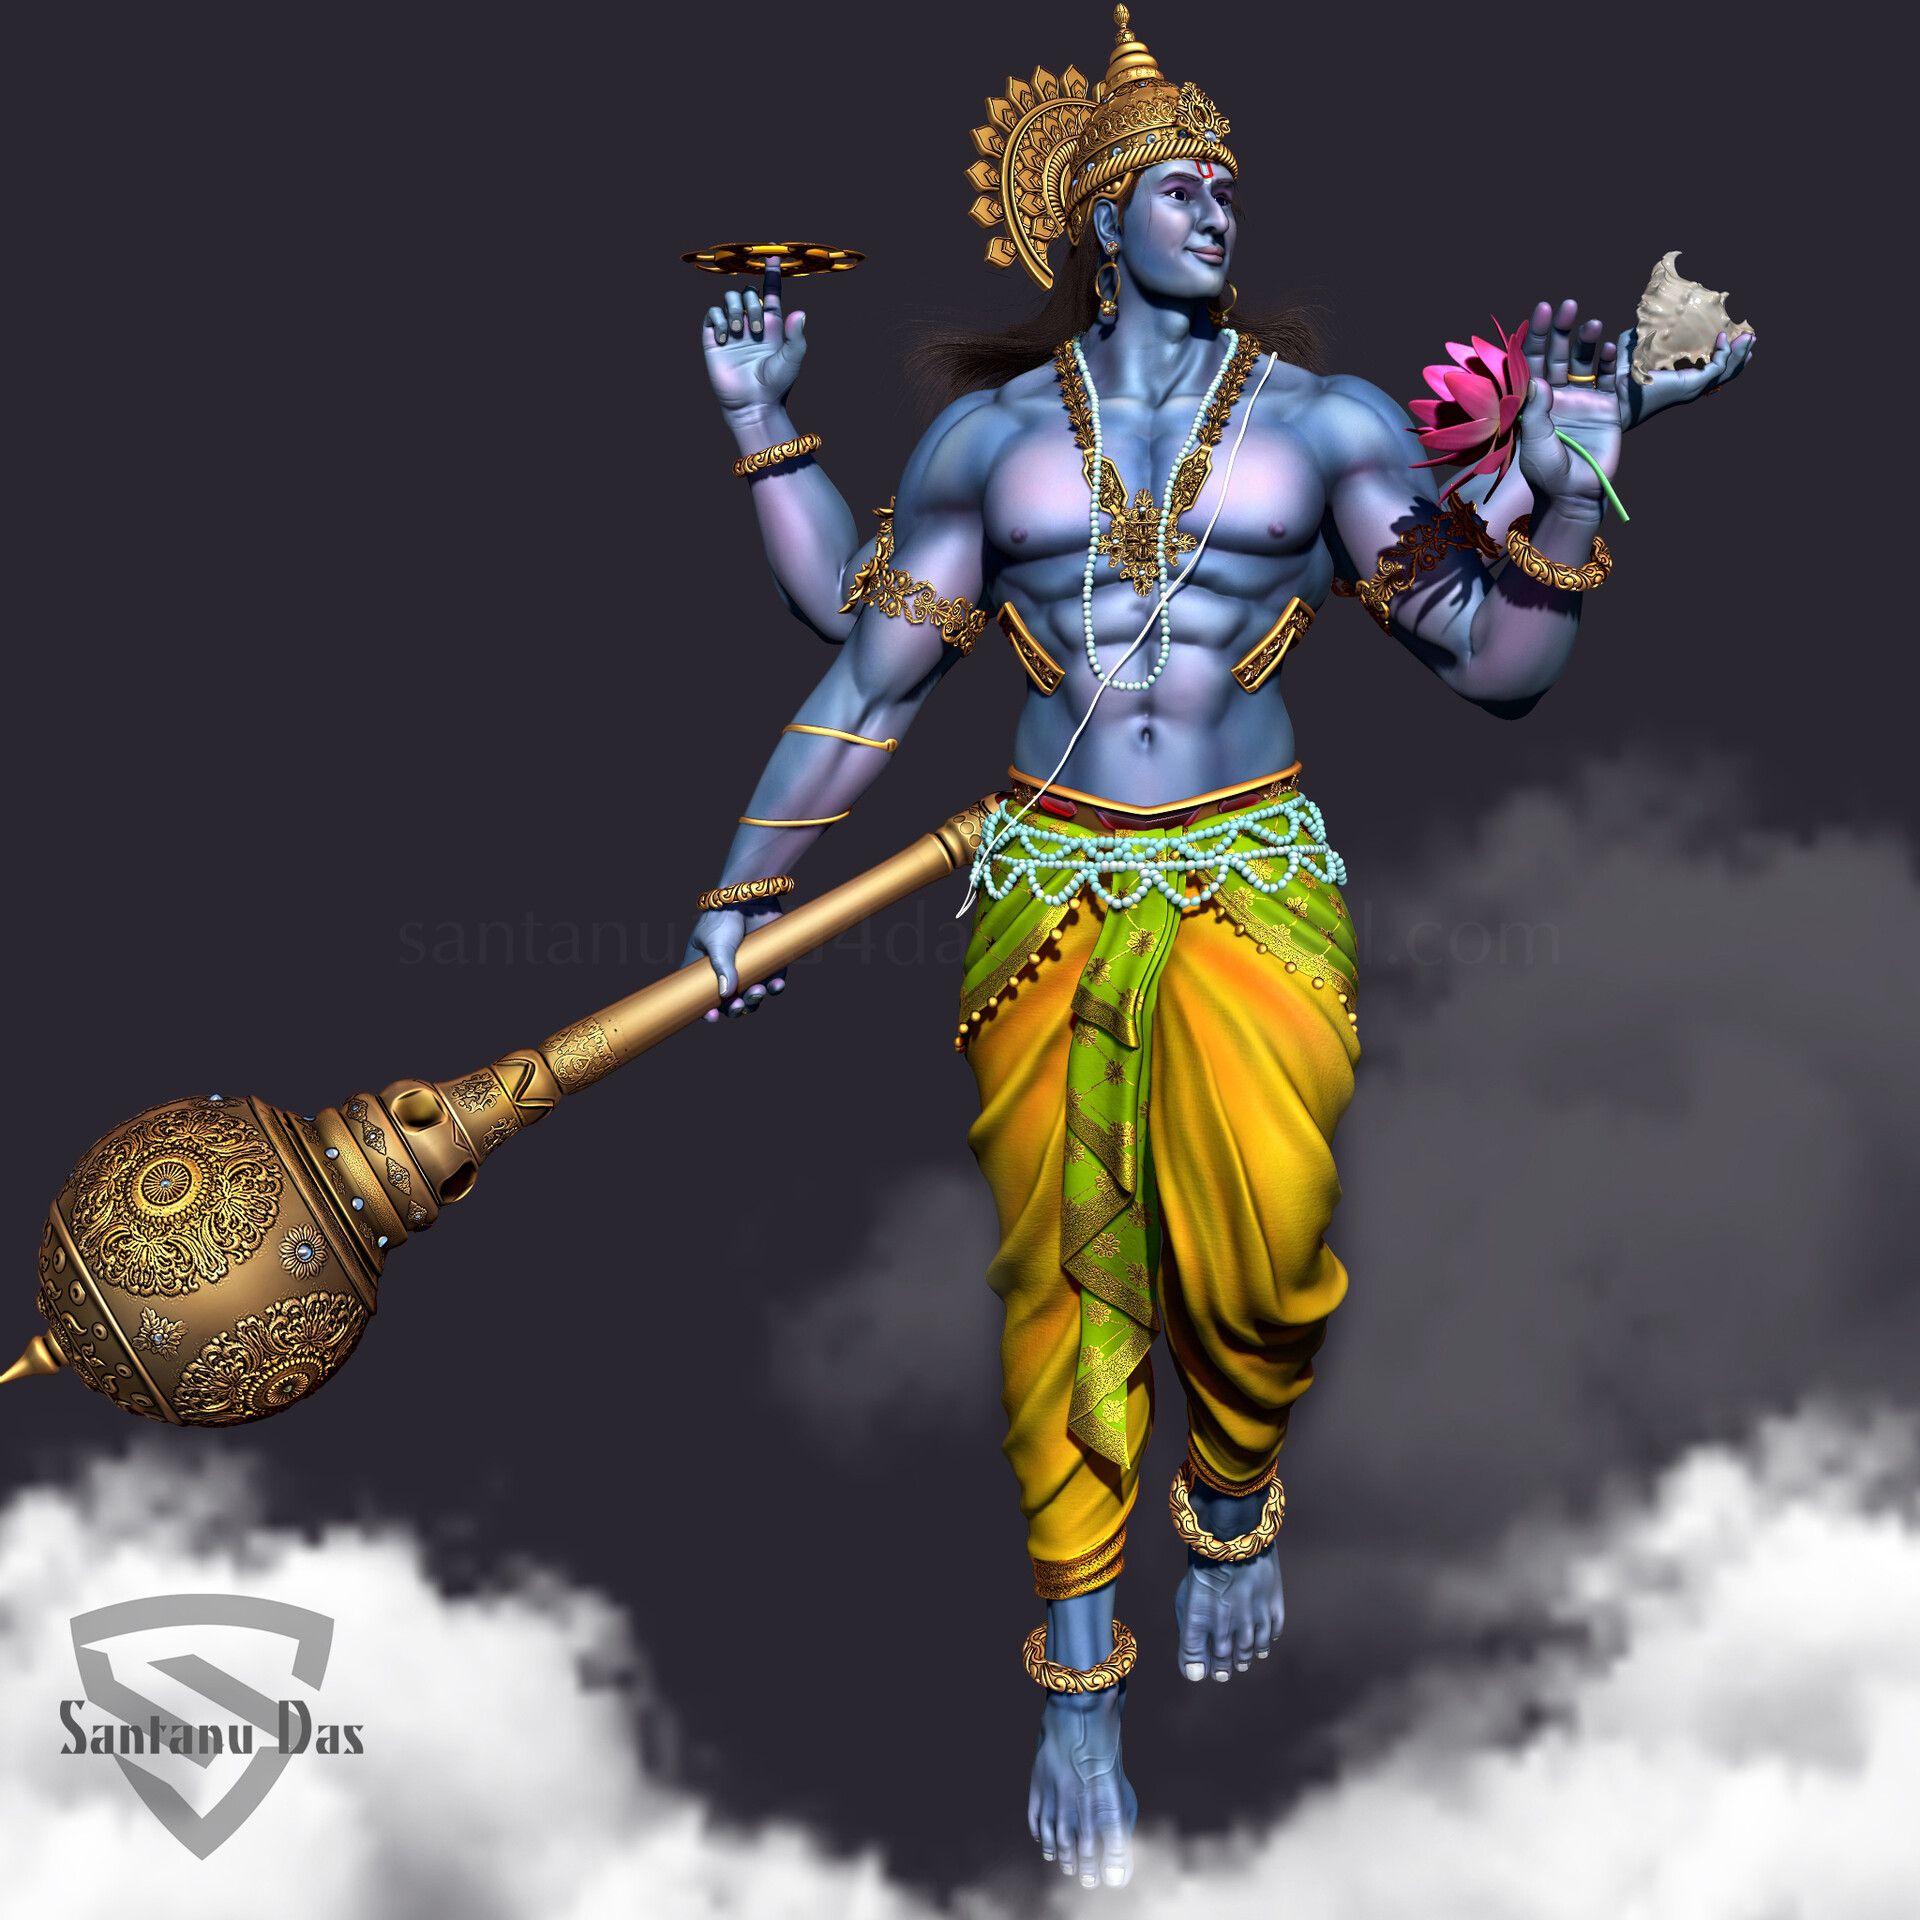 Lord Vishnu by Santanu Das, Santanu Das